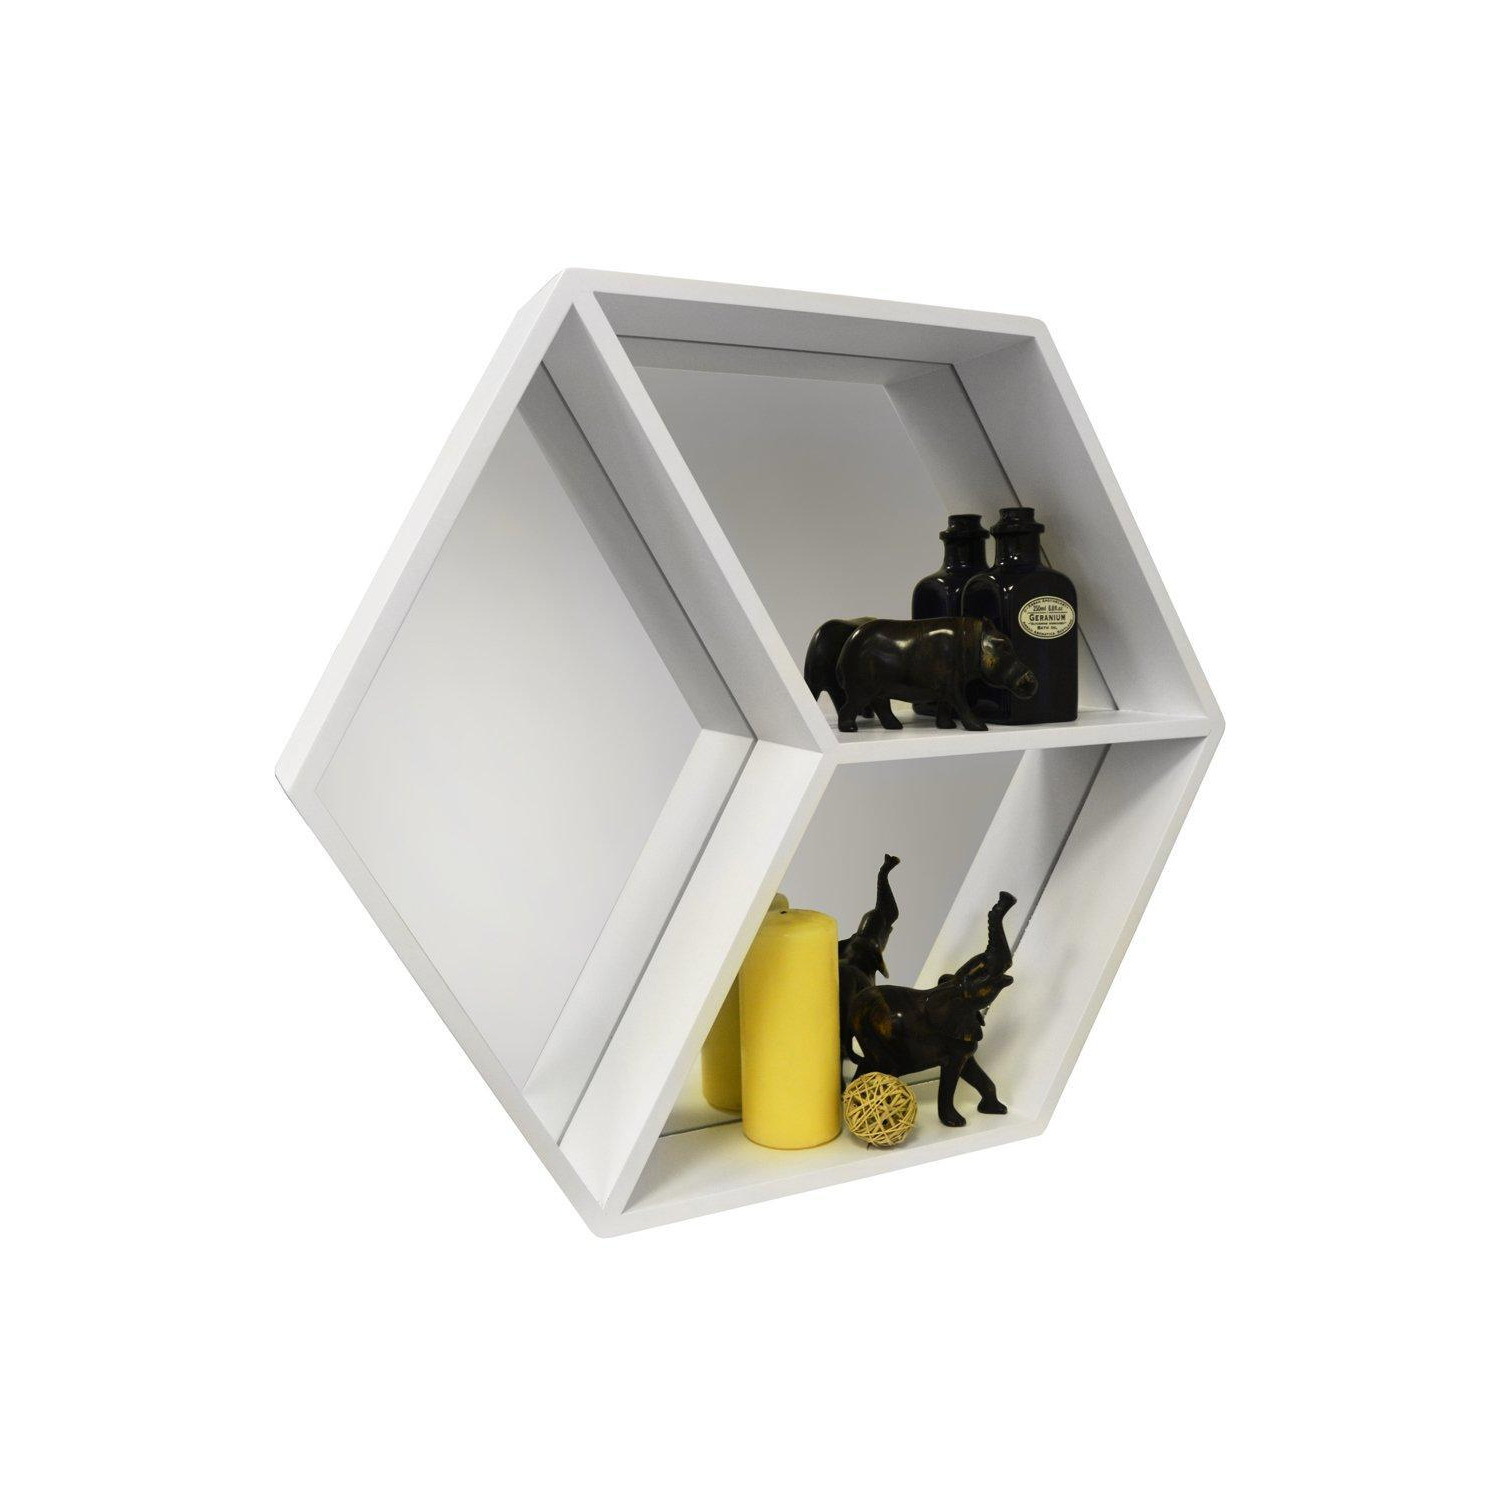 'Hexagon' - Wall Mounted Cube Storage Shelf With Mirror - White - image 1